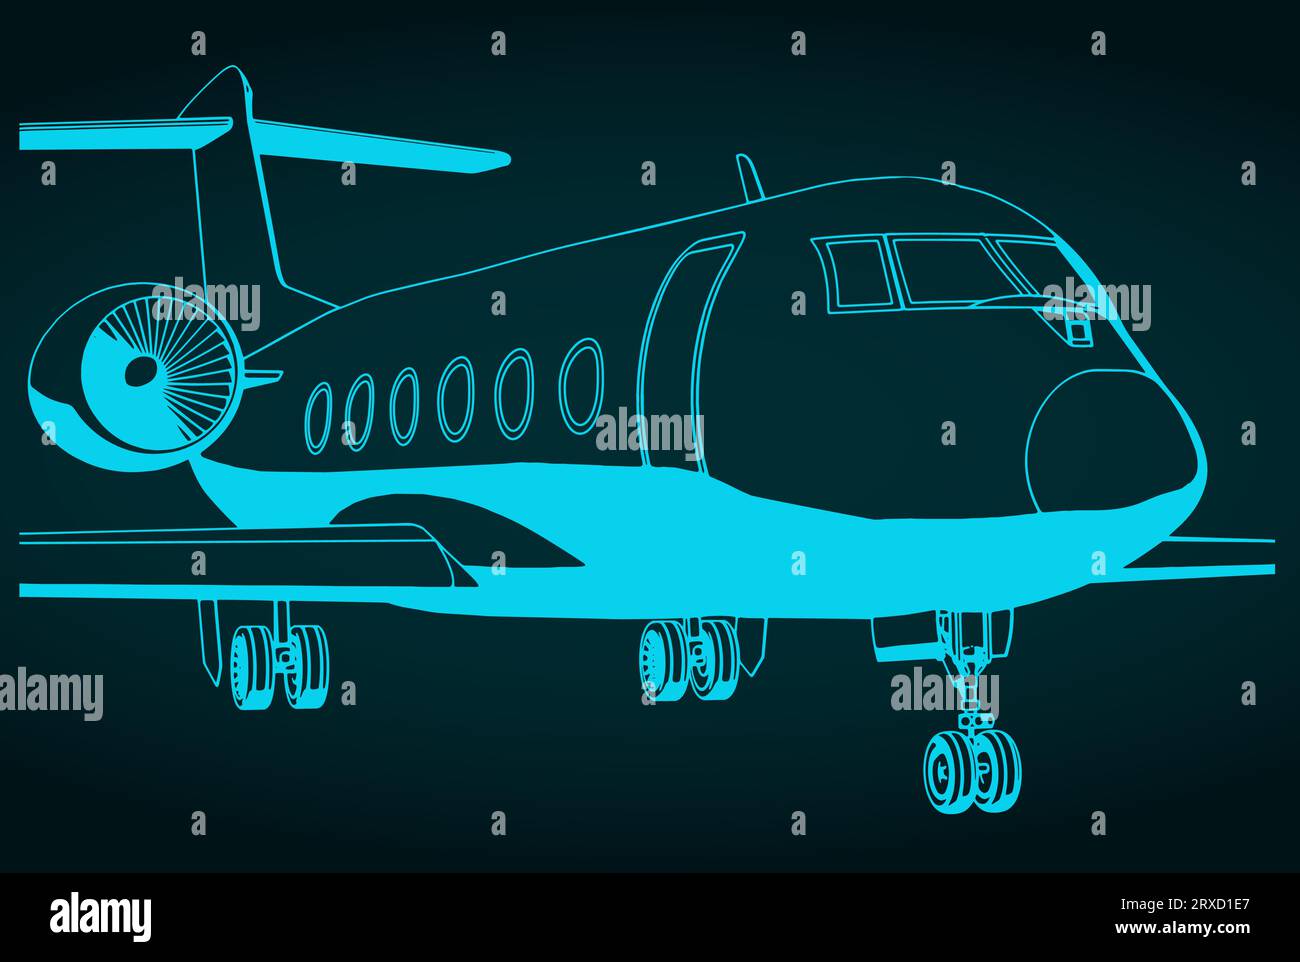 Stilisierte Vektorillustration eines privaten Business-Jets aus nächster Nähe Stock Vektor